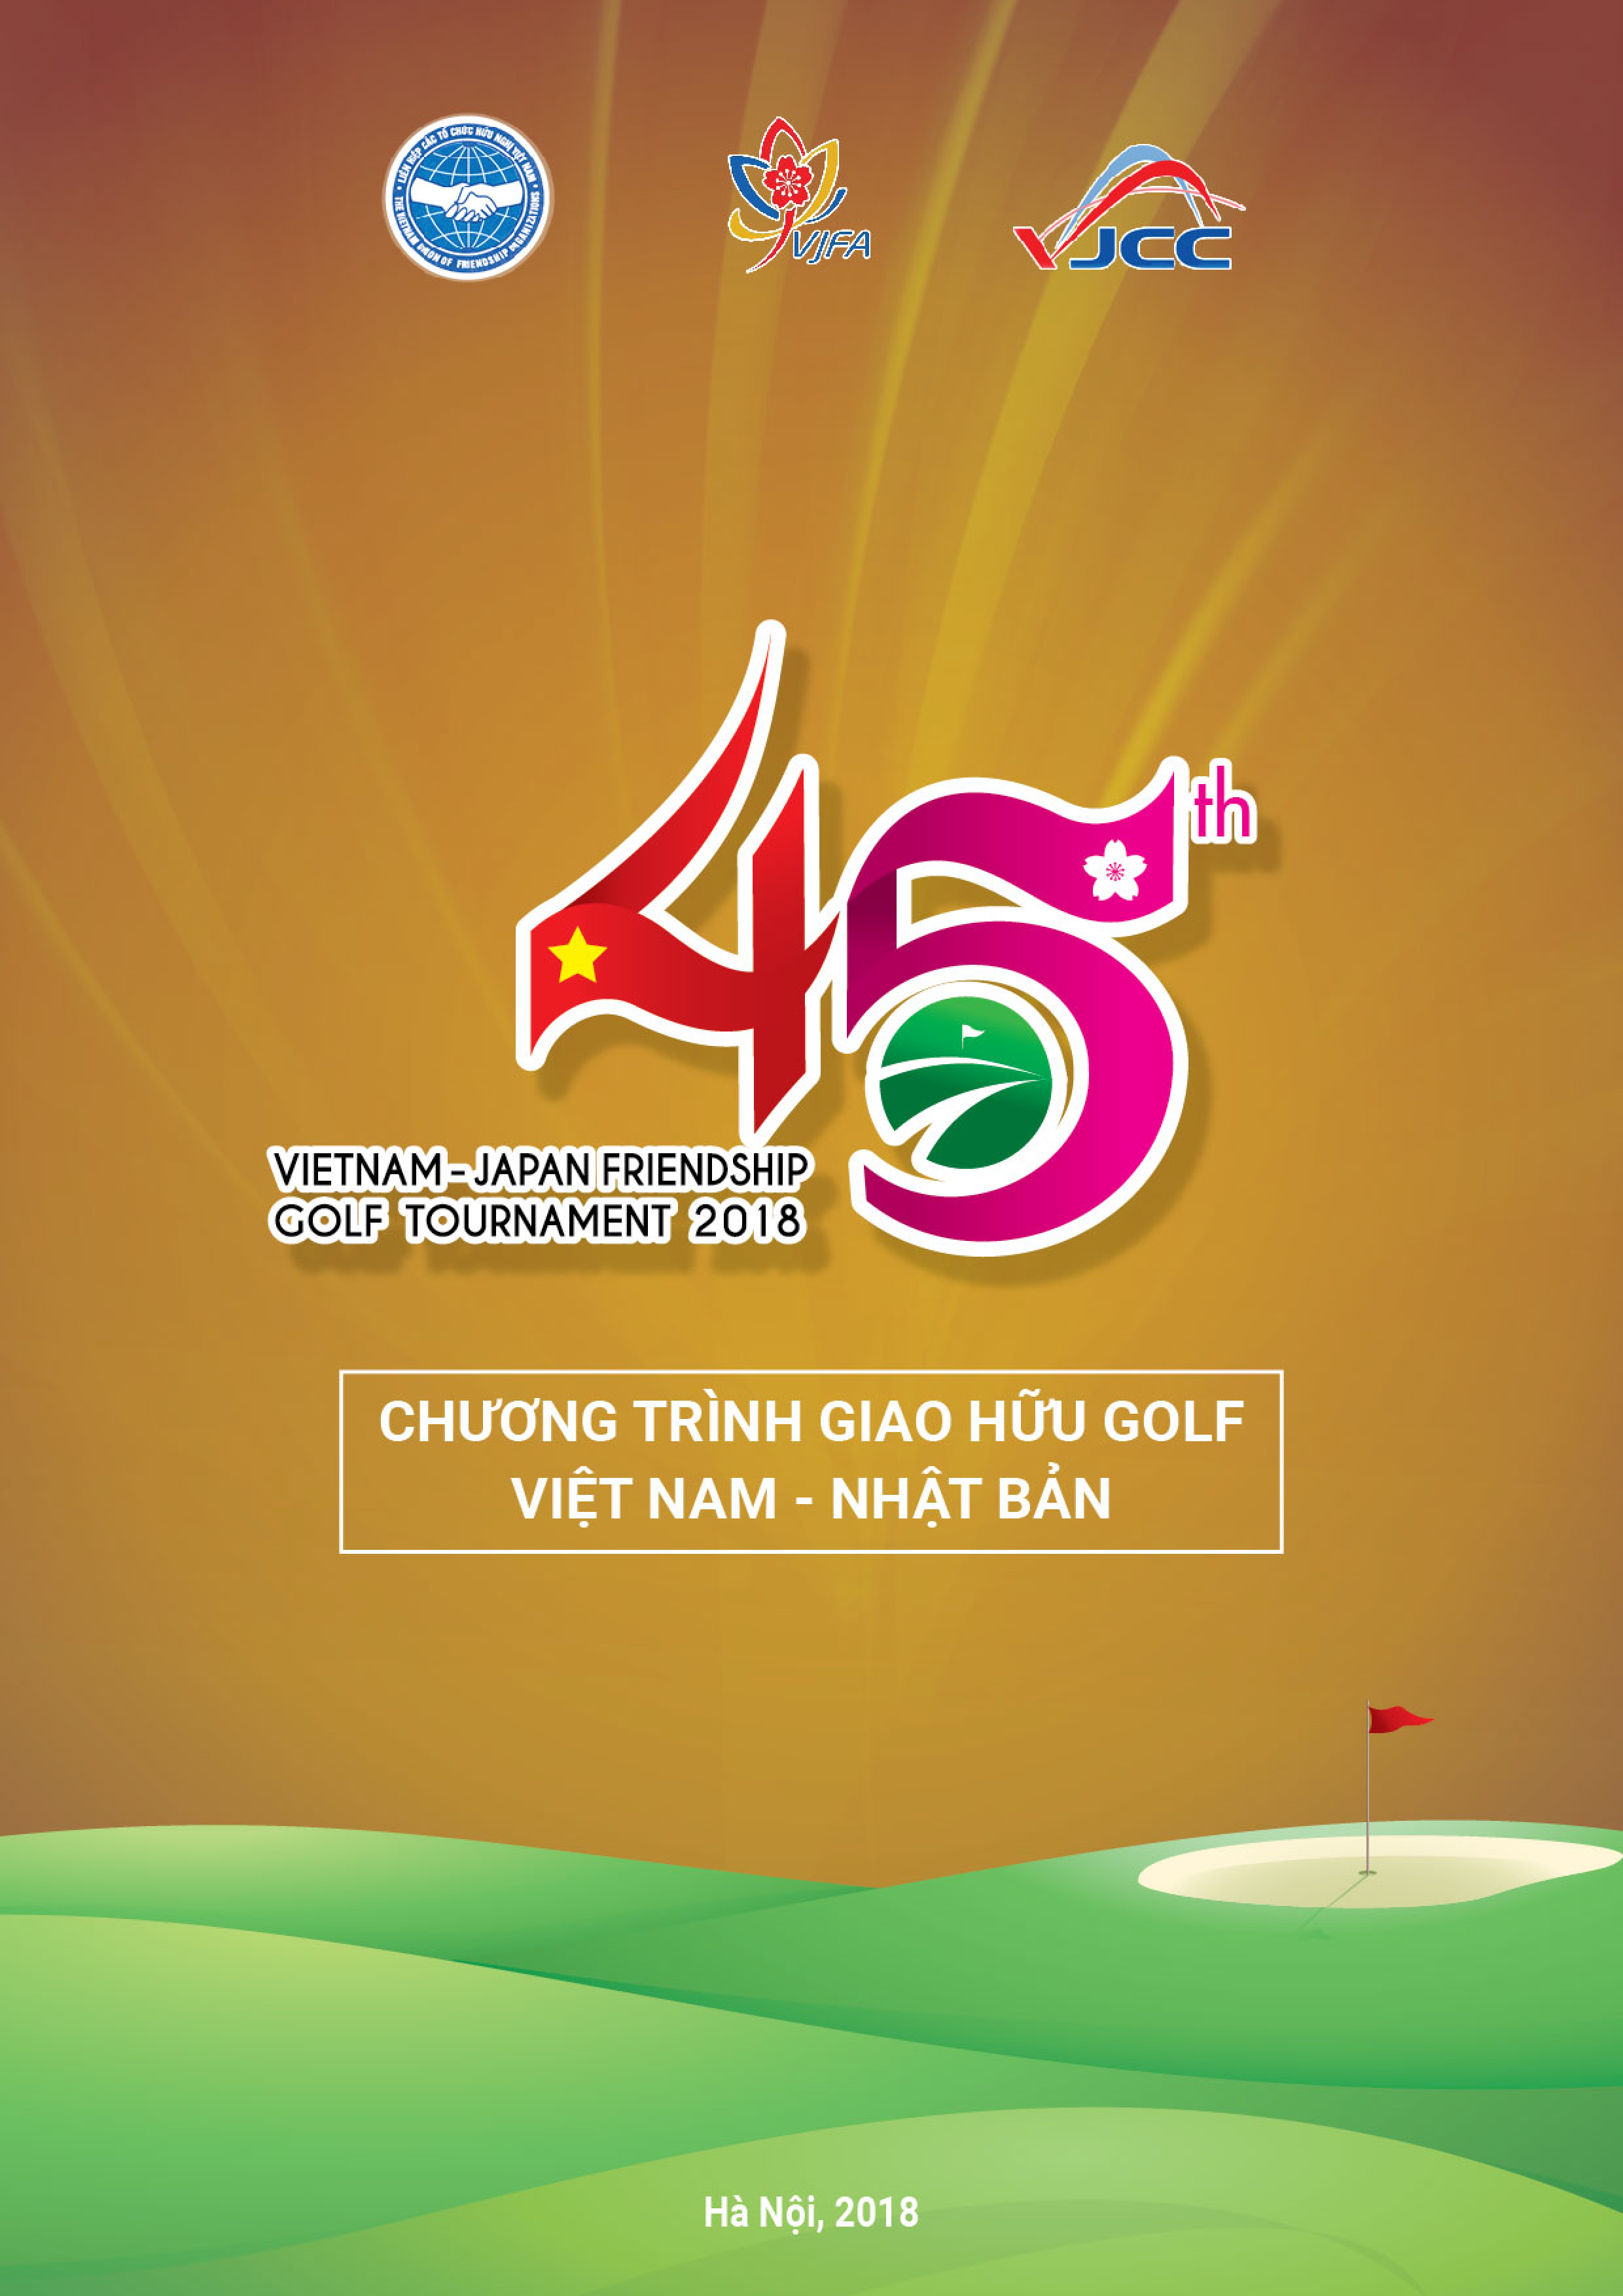 Giải golf “Vietnam - Japan Friendship Golf Tournament” chuẩn bị khởi tranh